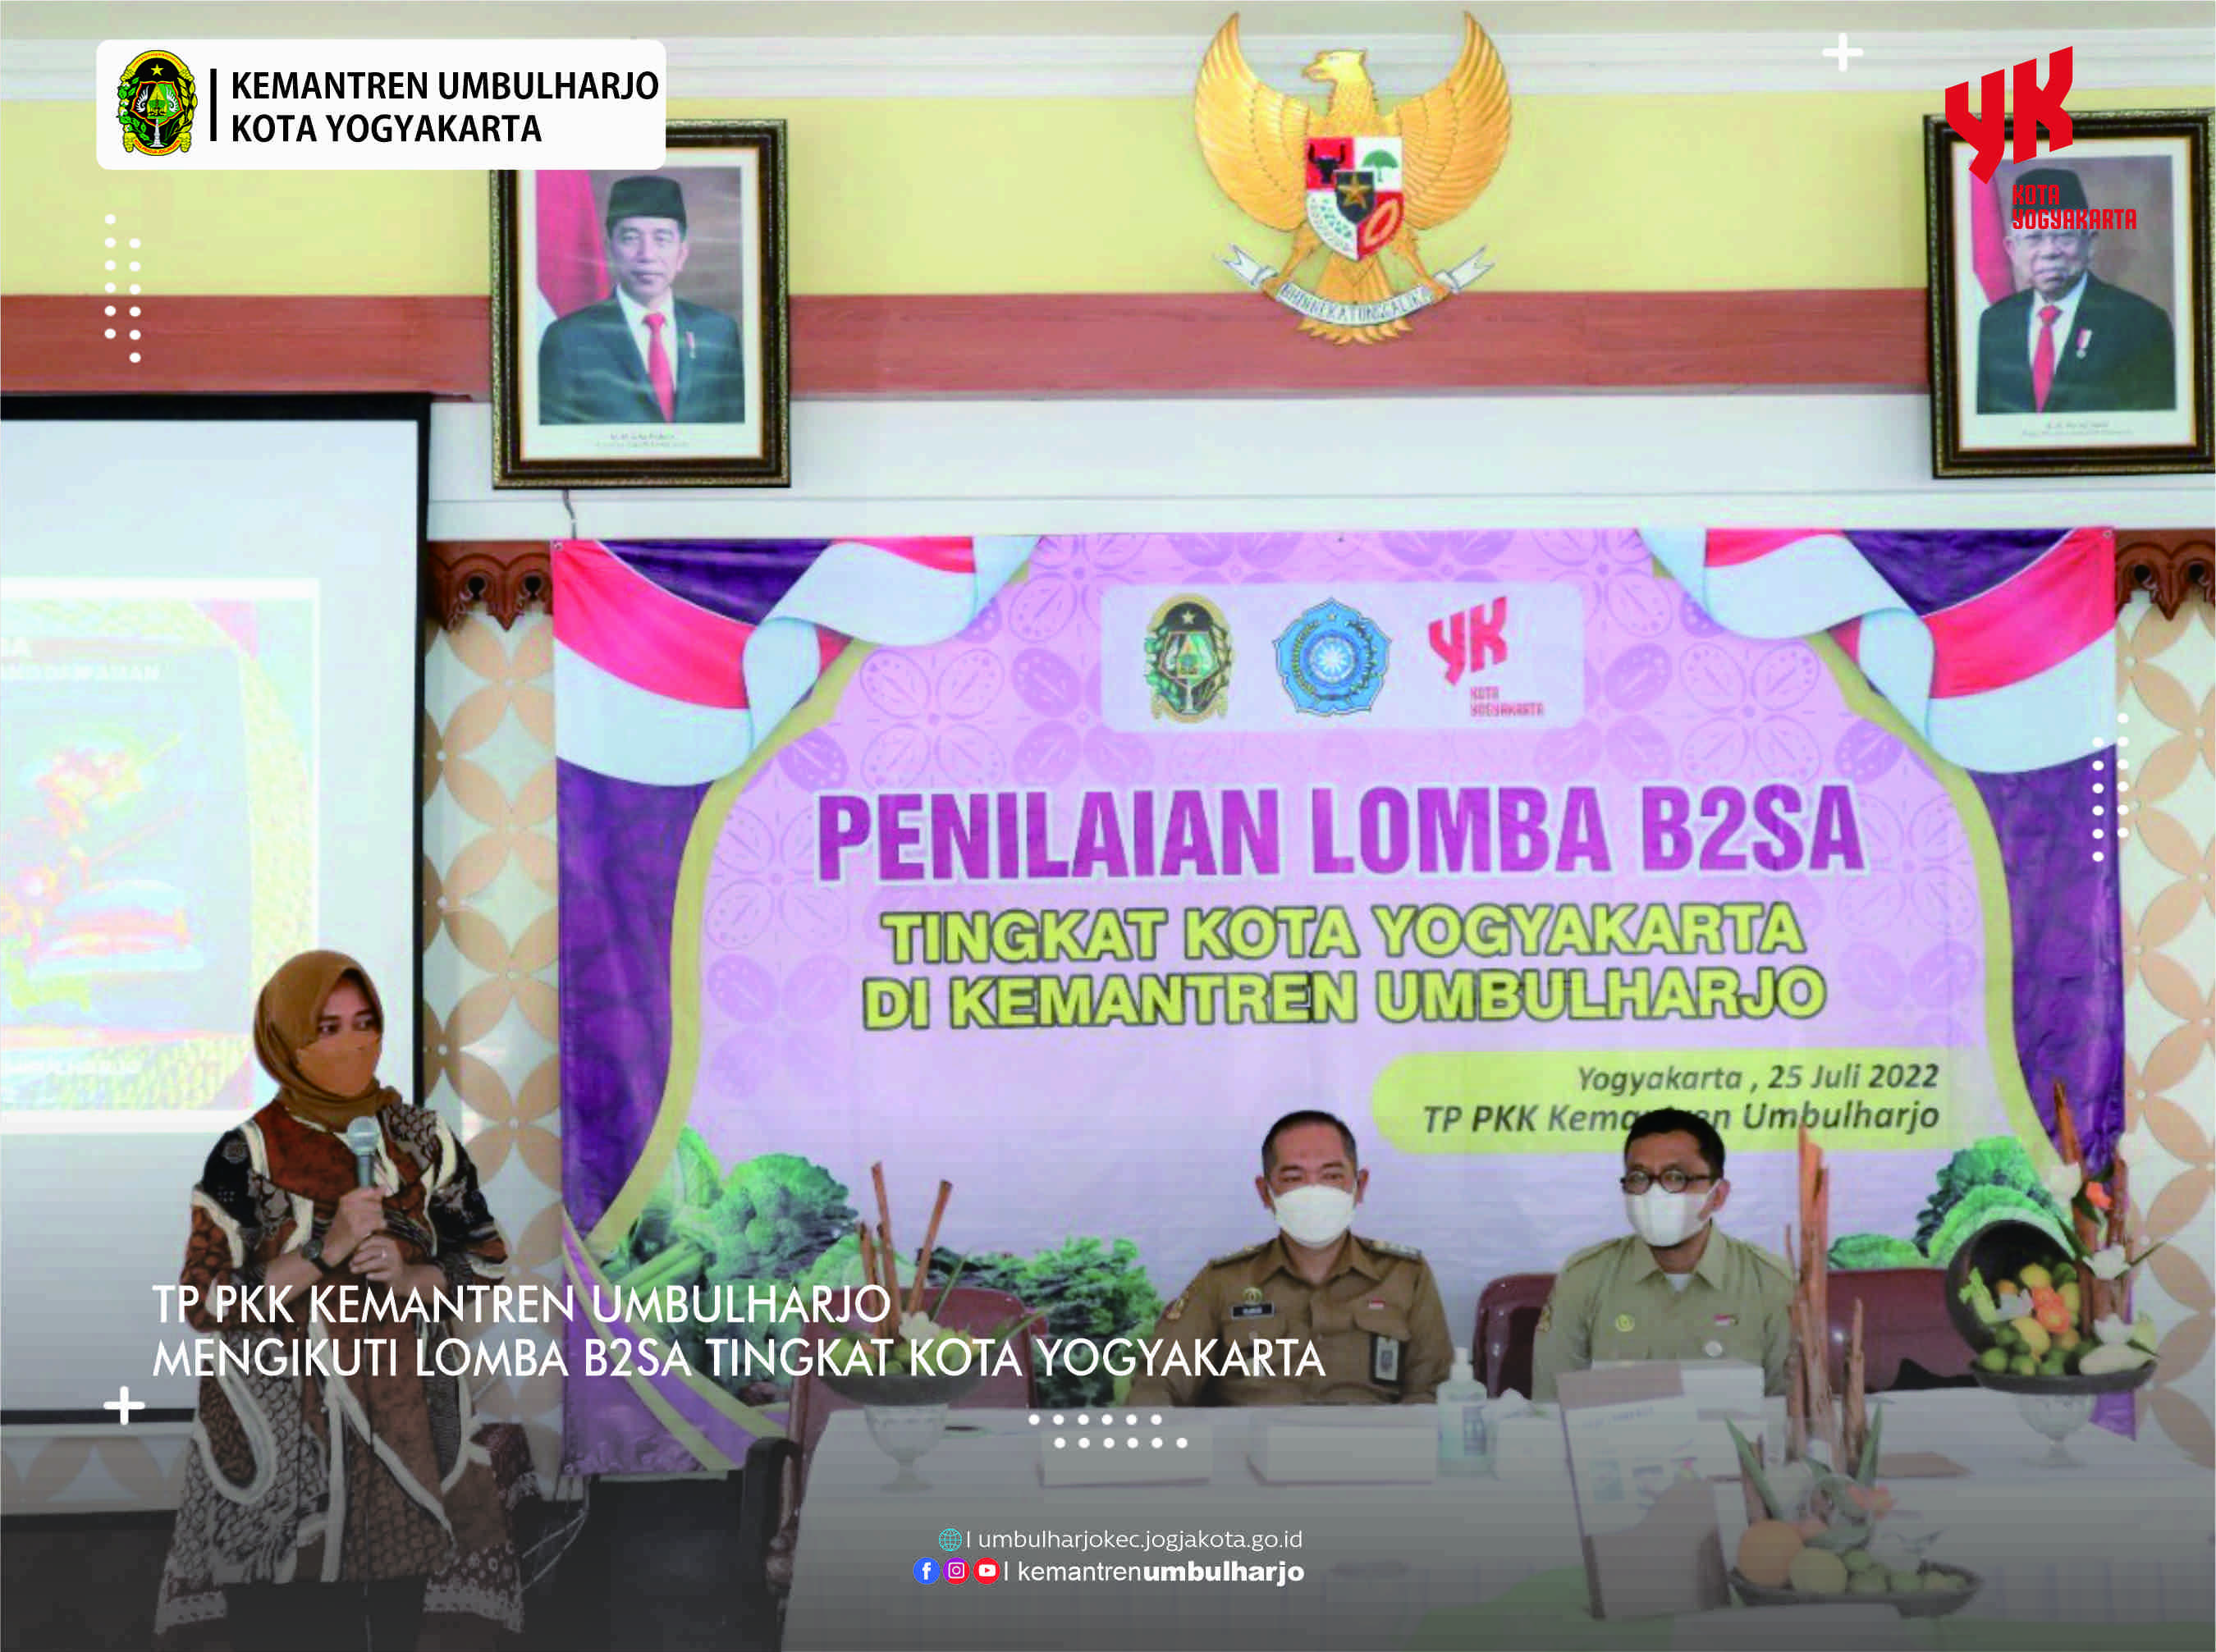 TP PKK Kemantren Umbulharjo Mengikuti Lomba B2SA Tingkat Kota Yogyakarta